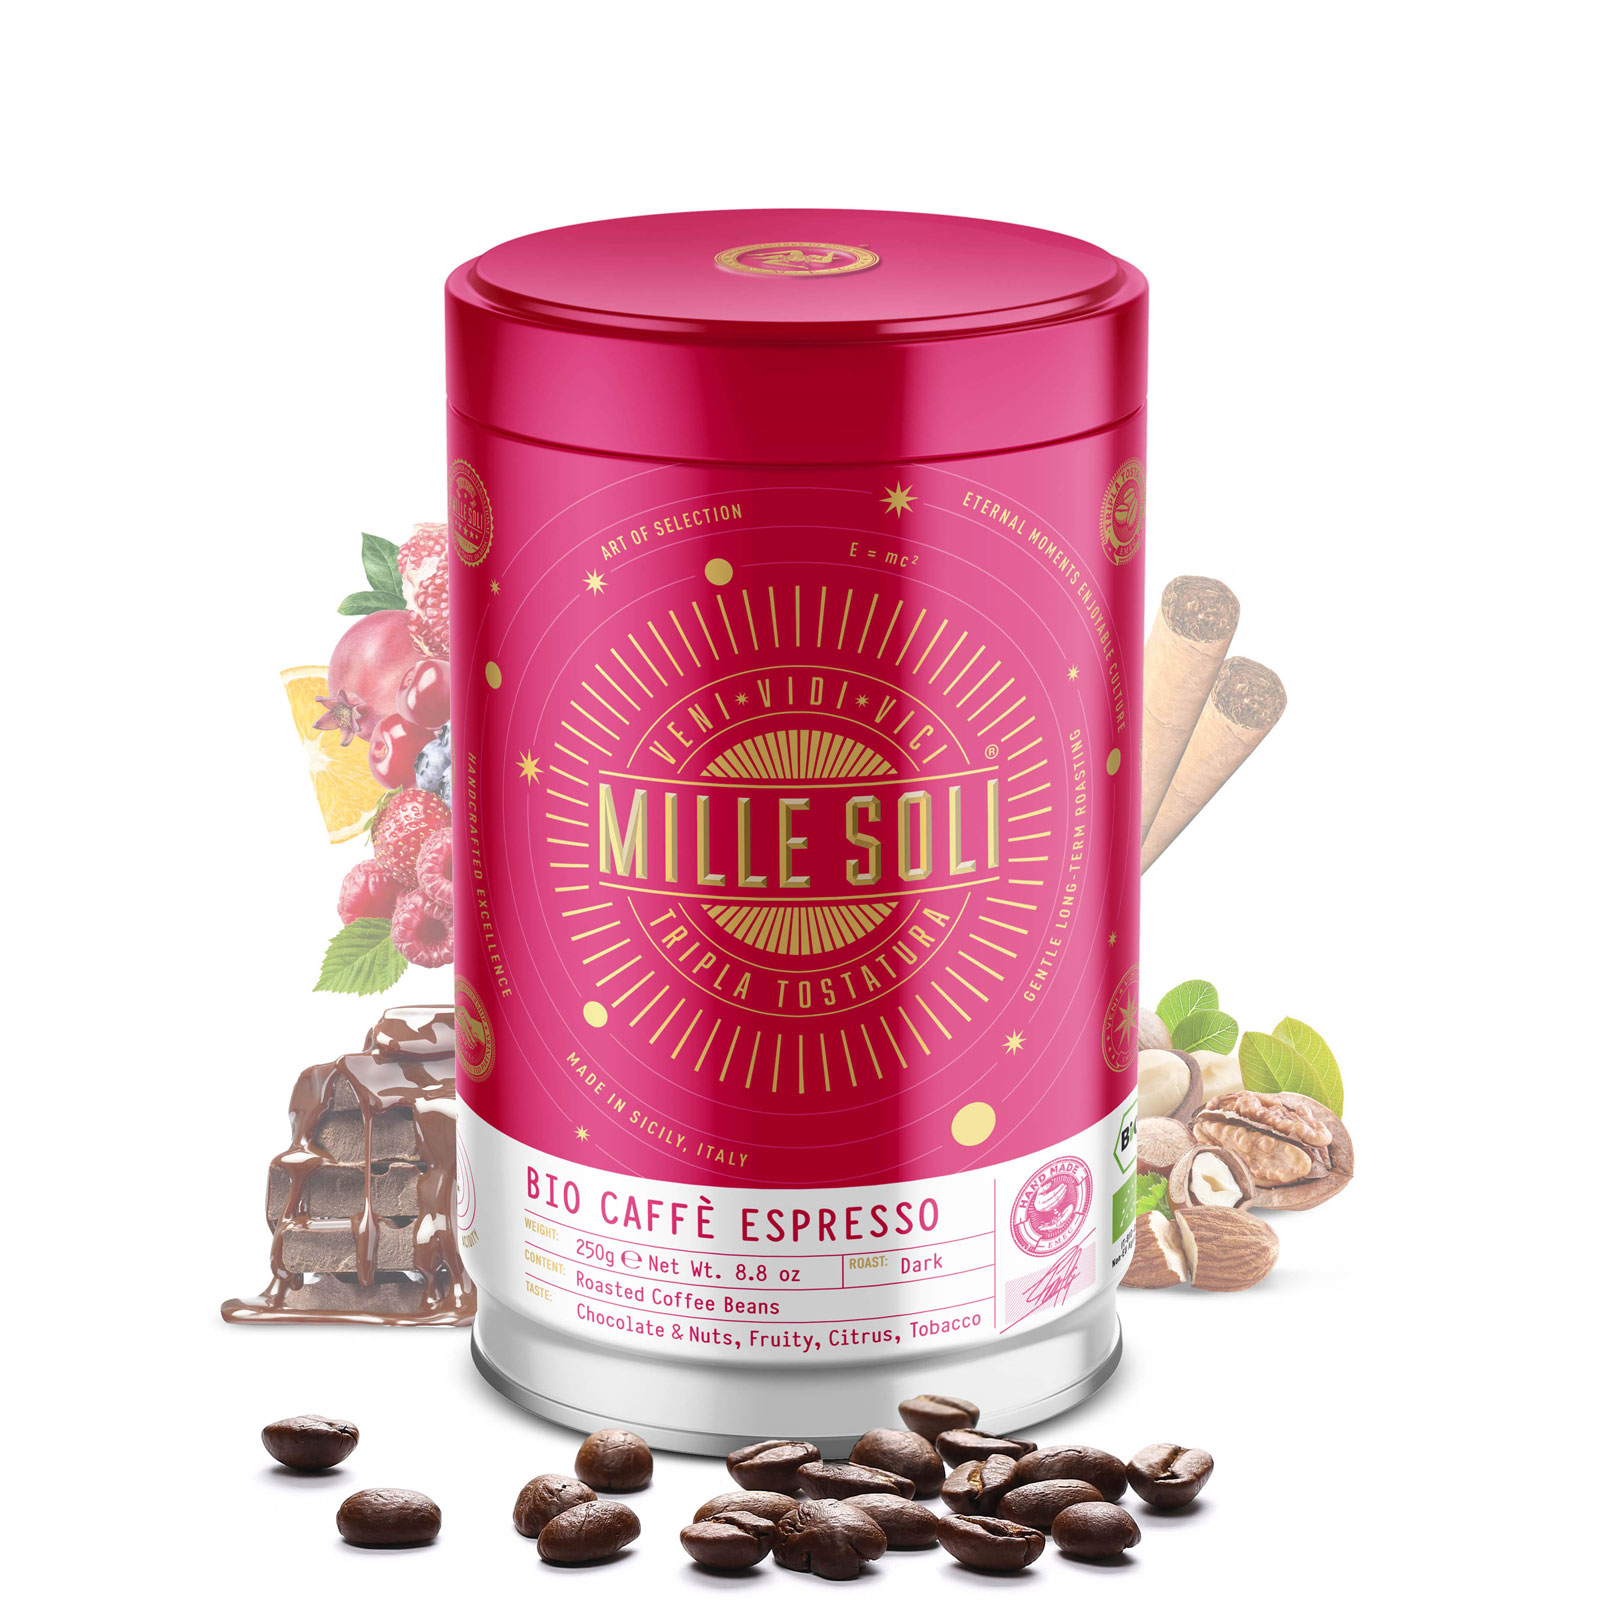 MILLE SOLI - ORGANIC Caffè Espresso - 250g - Beans